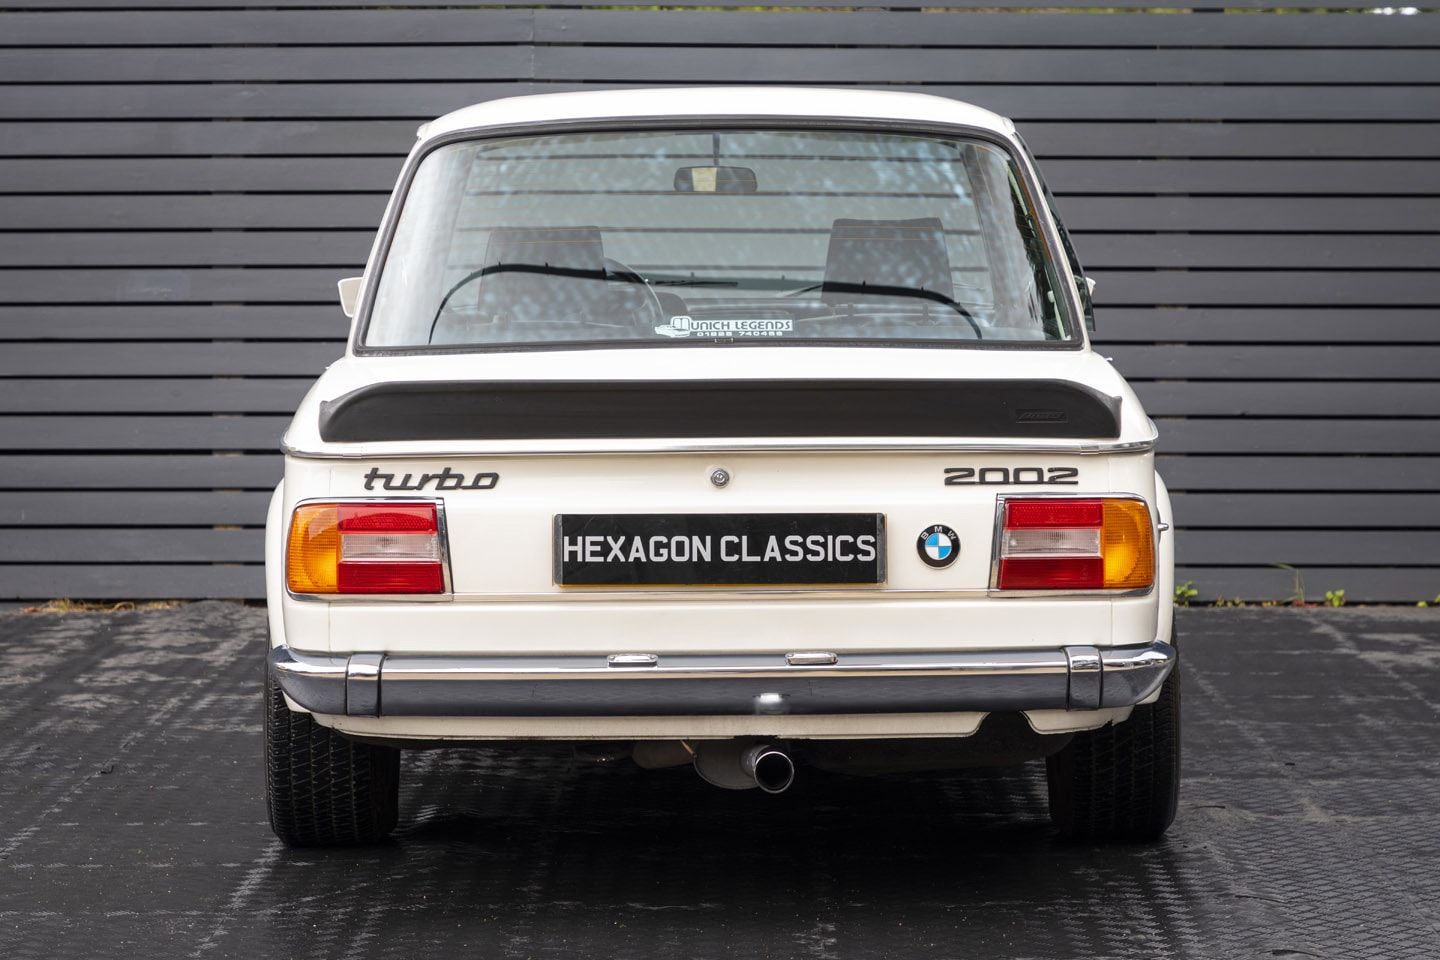 BMW 2002 Turbo Original 1975 Model Auction chamonix white hexagon classics car coupe automotive big sale price